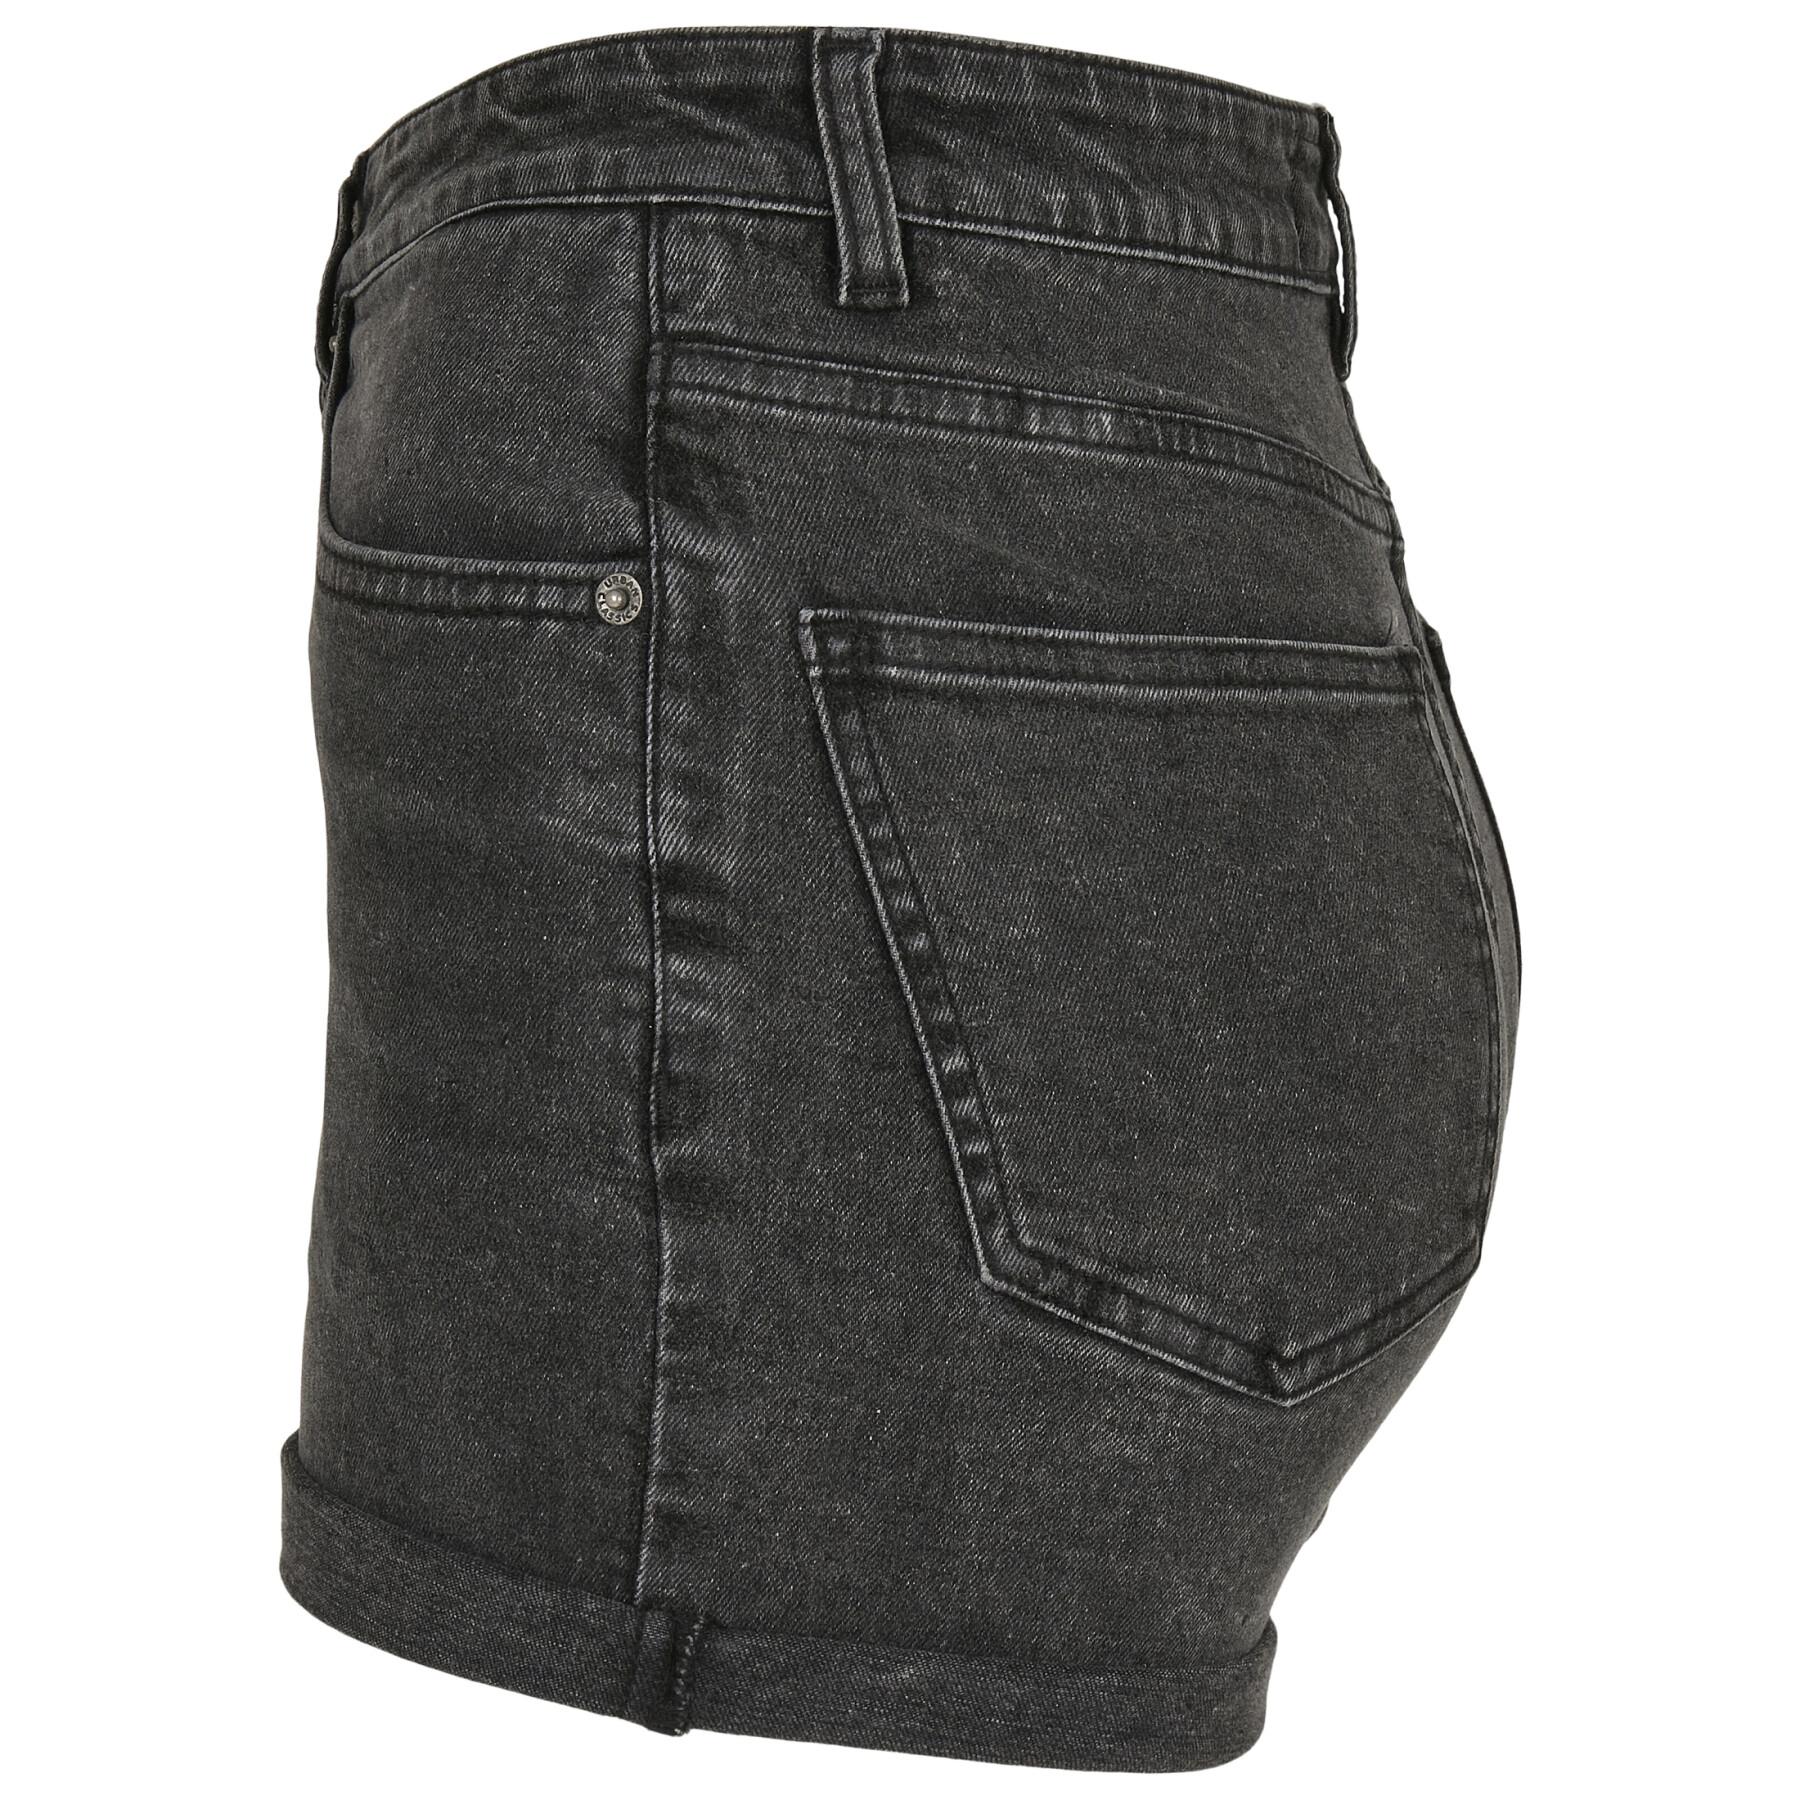 Women's denim shorts Urban Classics 5 pocket